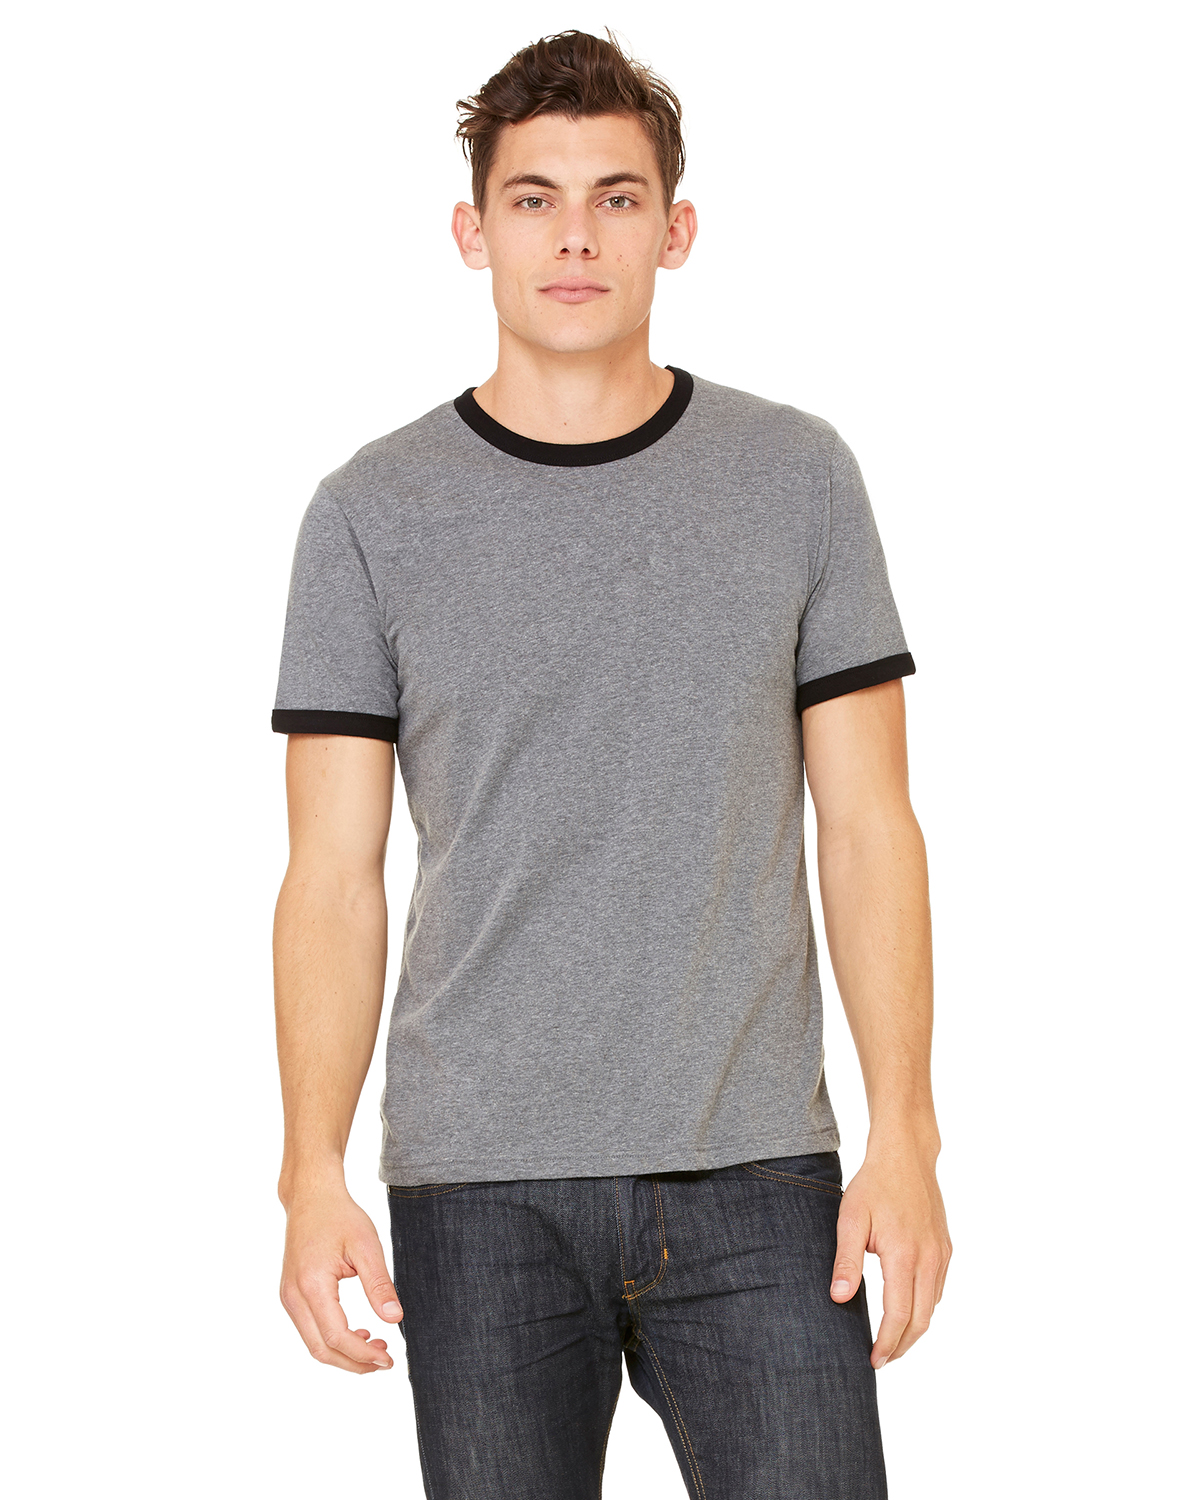 Bayside 3055 Union Made Long Sleeve T-Shirt with a Pocket